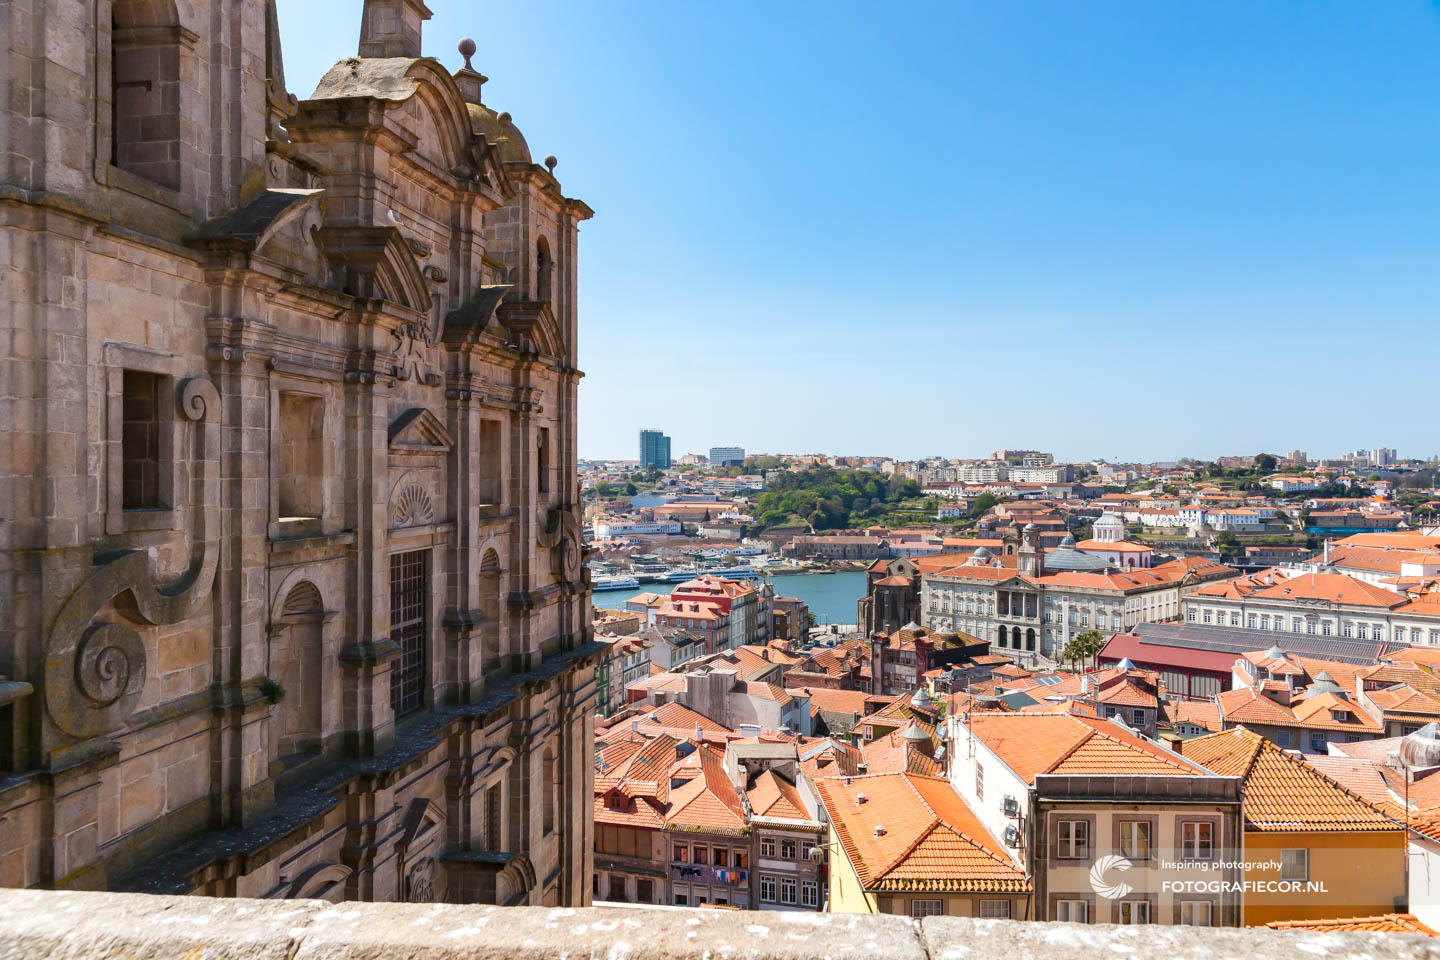 Ribeira | Uitzicht op Porto | bezienswaardigheden porto | citytrip porto | foto maken |foto tips | fotografie reizen | fotografie tips porto | porto bezienswaardigheden | porto citytrip | Portugal | reisfotografie | stedentrip porto | fotografie 